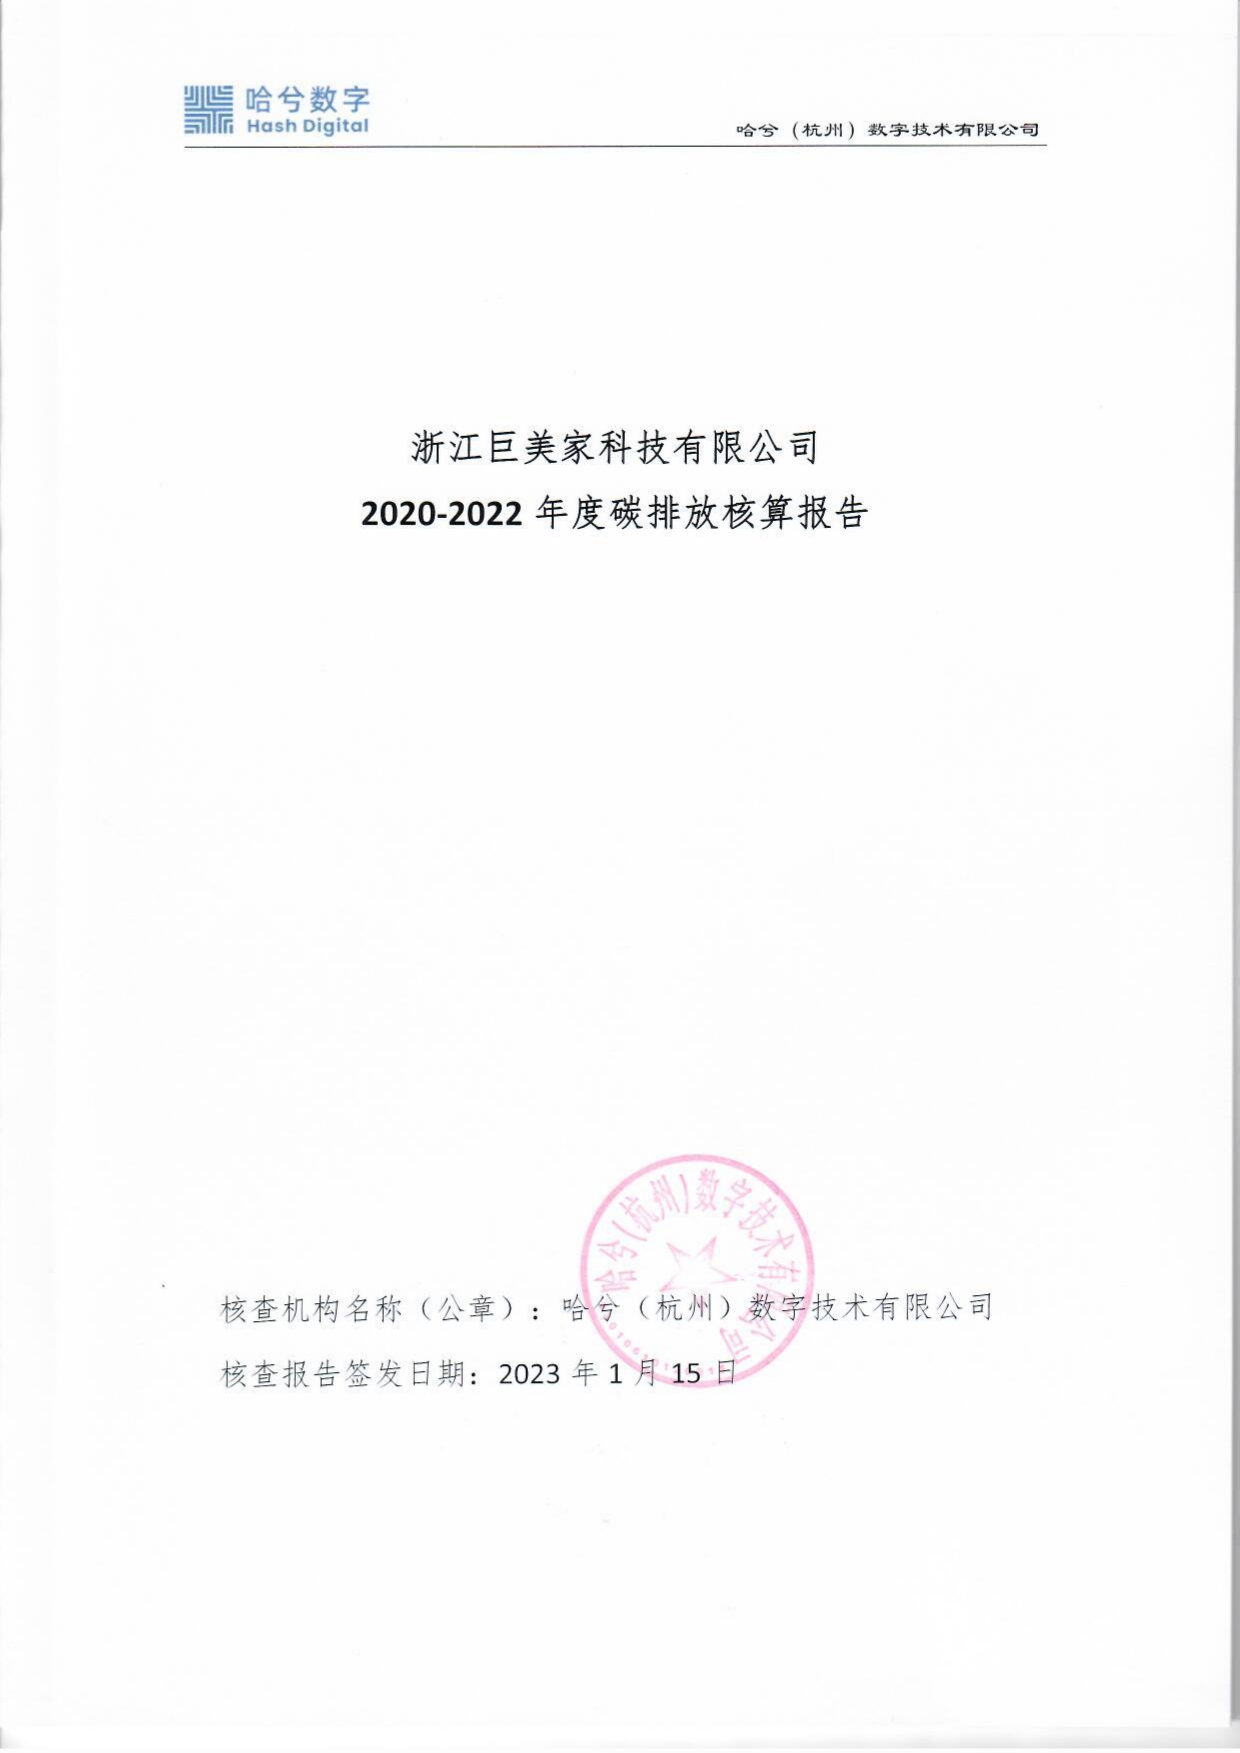 2020-2022年度碳排放核算报告（盖章）_pages-to-jpg-0001.jpg